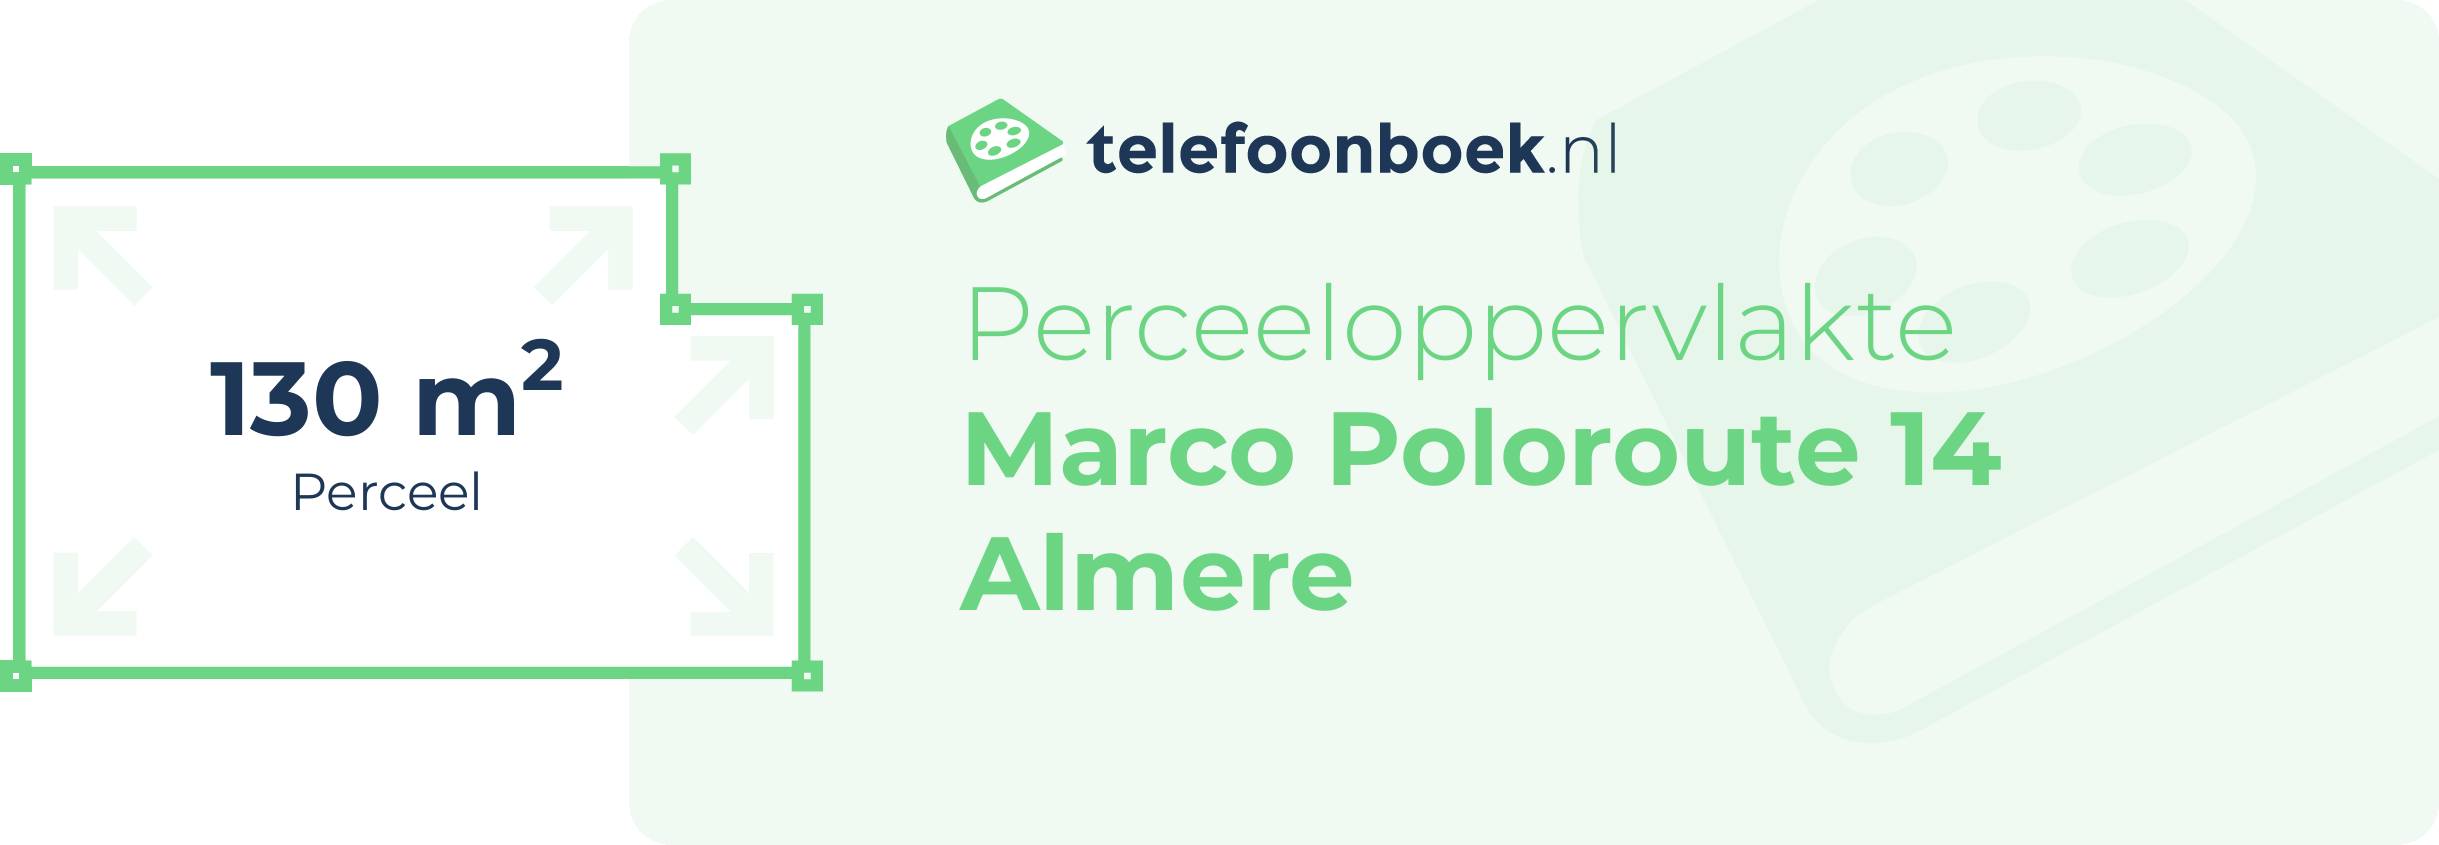 Perceeloppervlakte Marco Poloroute 14 Almere